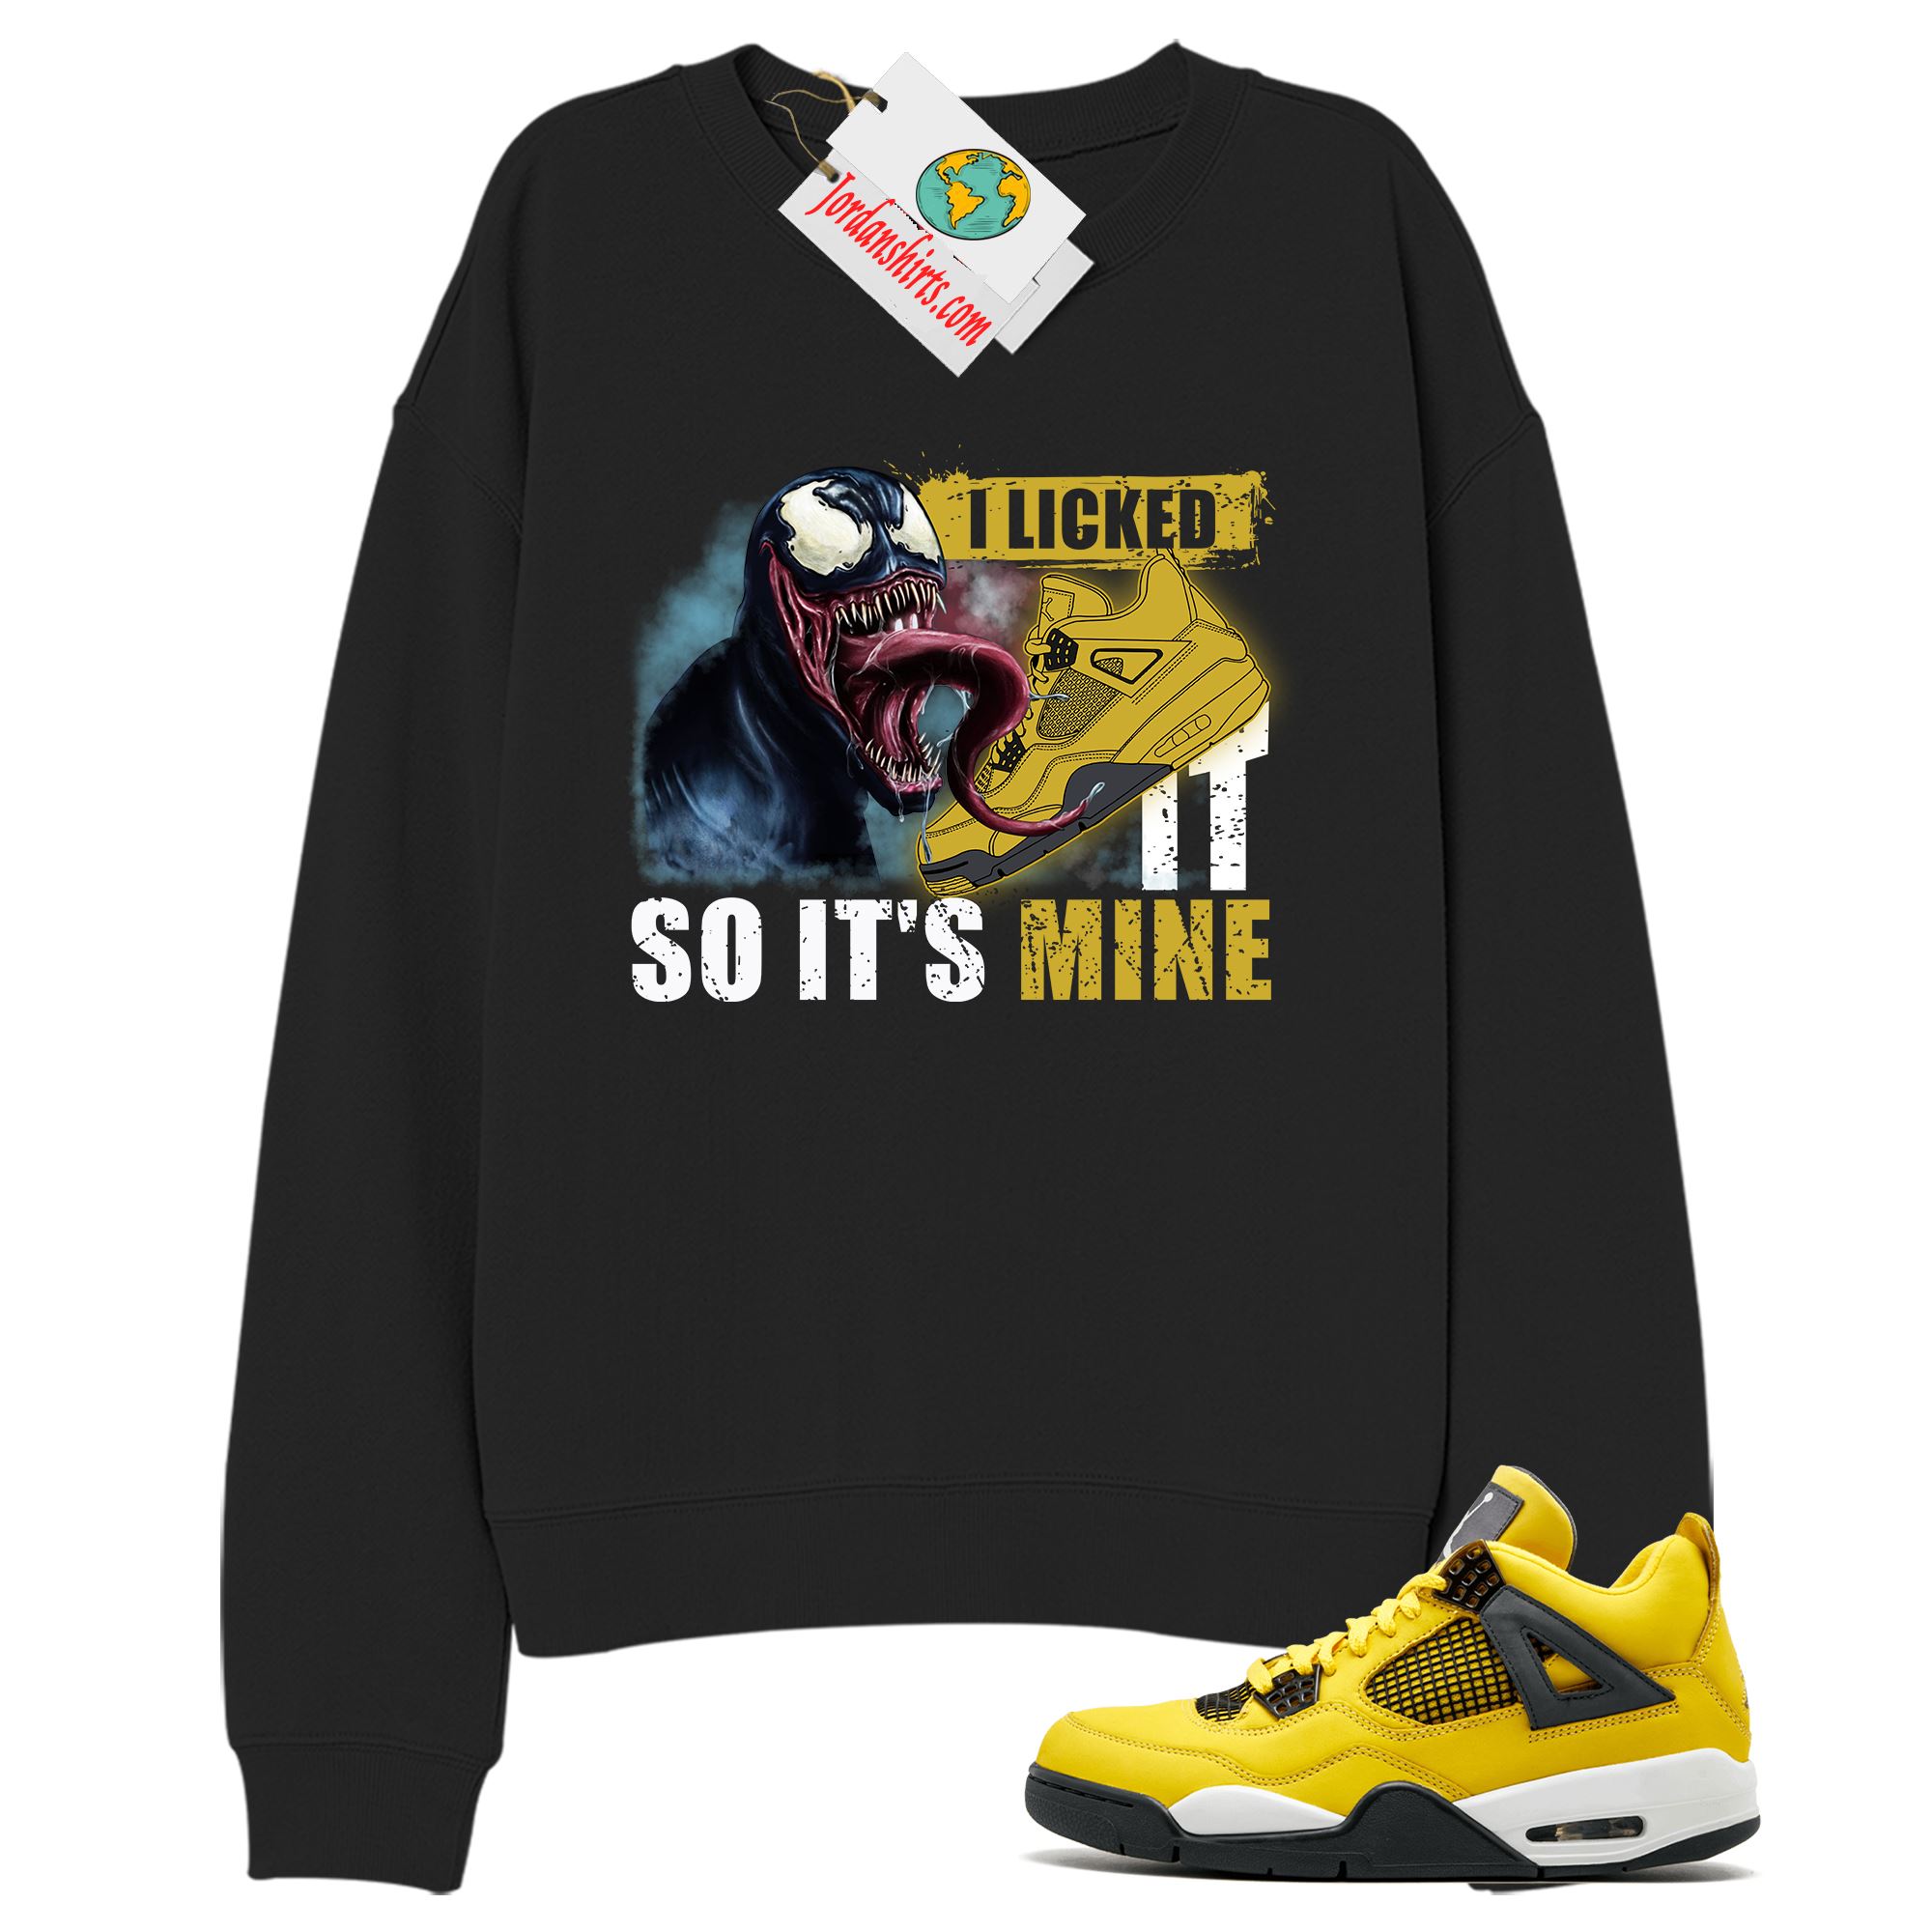 Jordan 4 Sweatshirt, Venom Black Sweatshirt Air Jordan 4 Tour Yellow Lightning 4s Full Size Up To 5xl